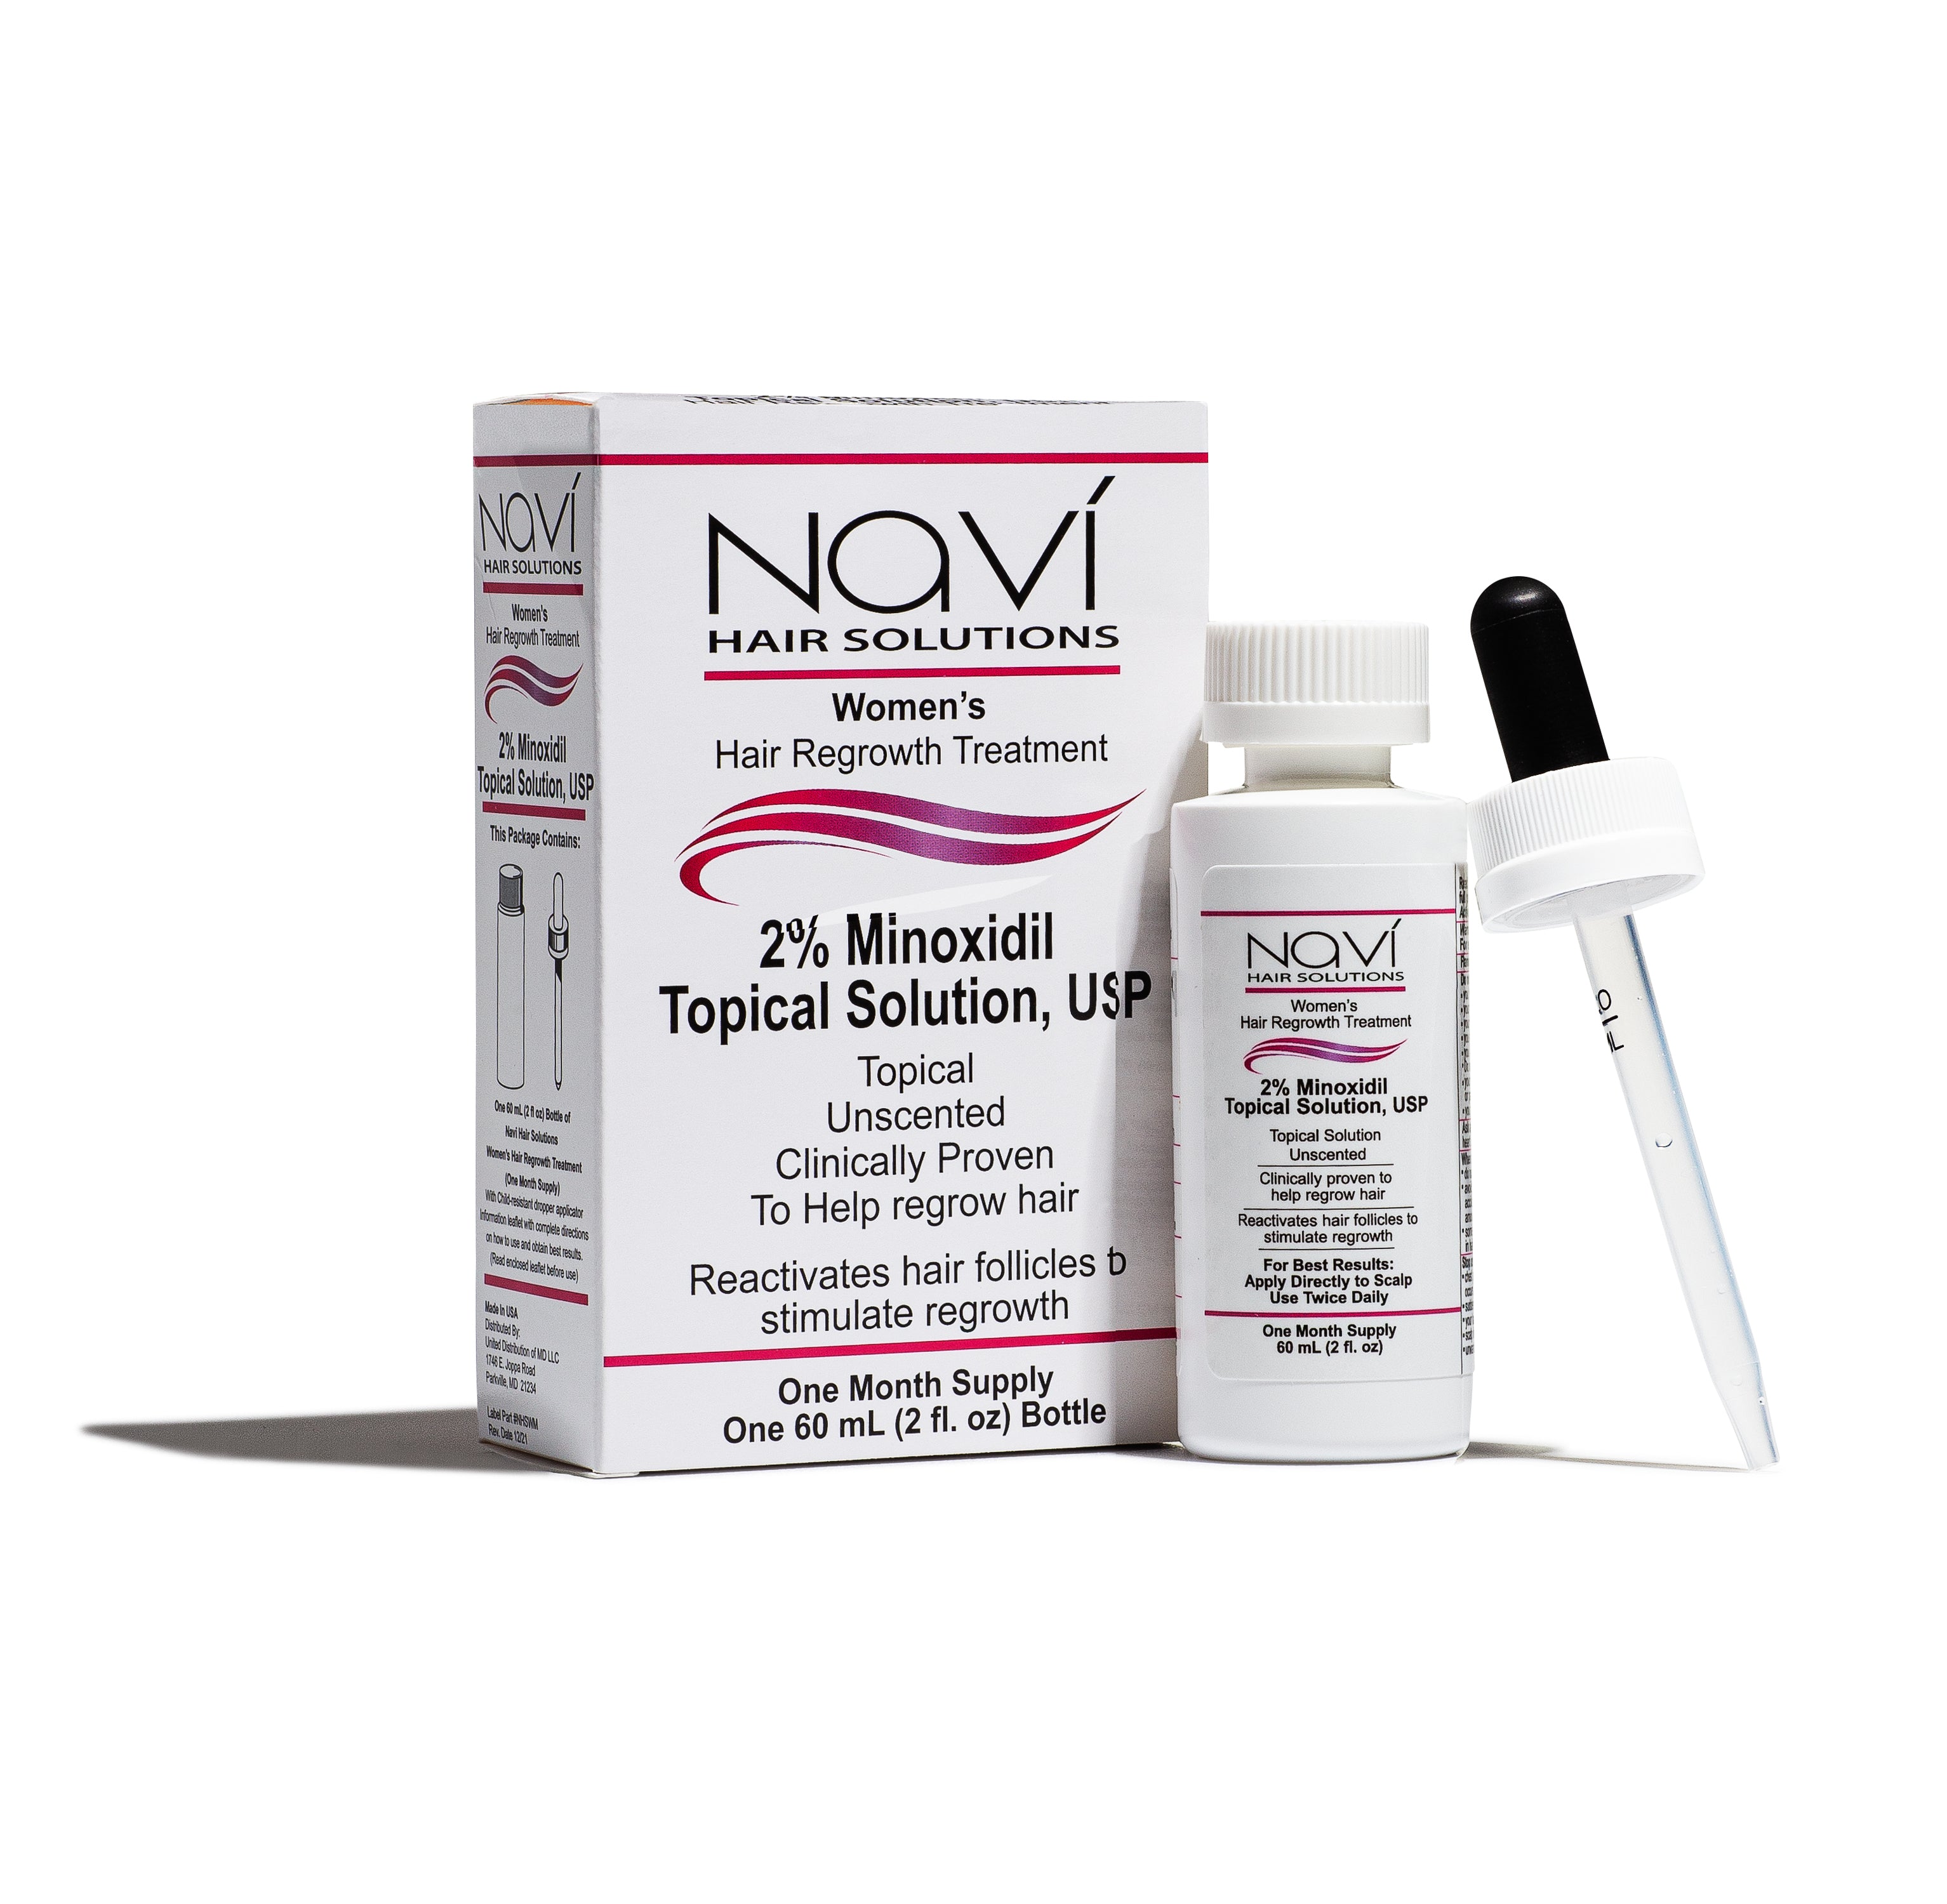 Navi Hair Solutions Women's 2% Minoxidil Topical